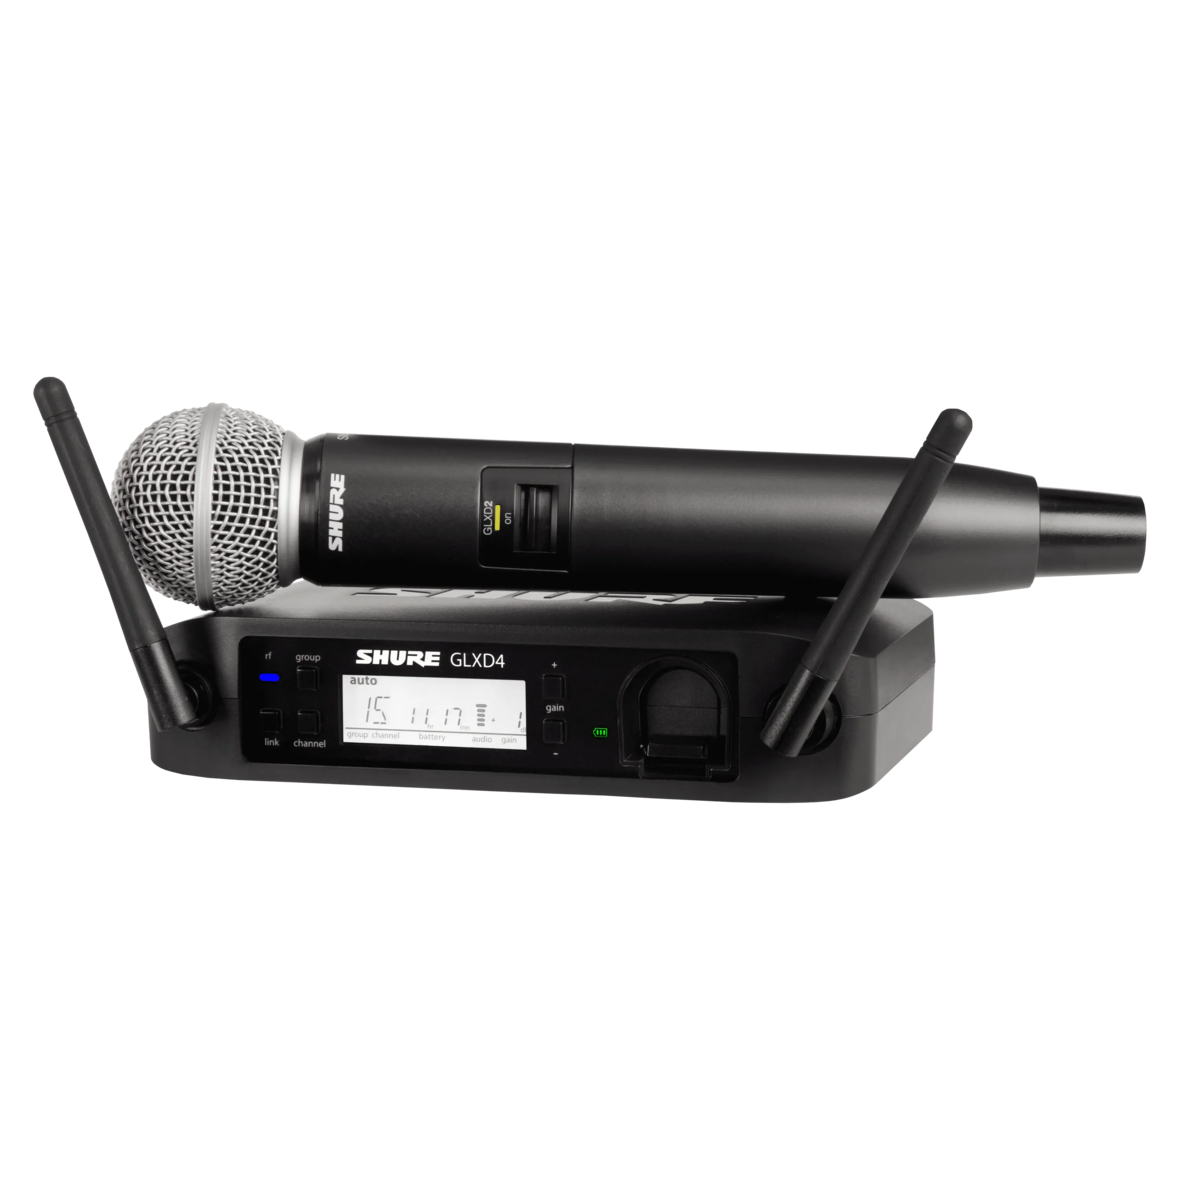 SM58® - Vocal Microphone - Shure USA